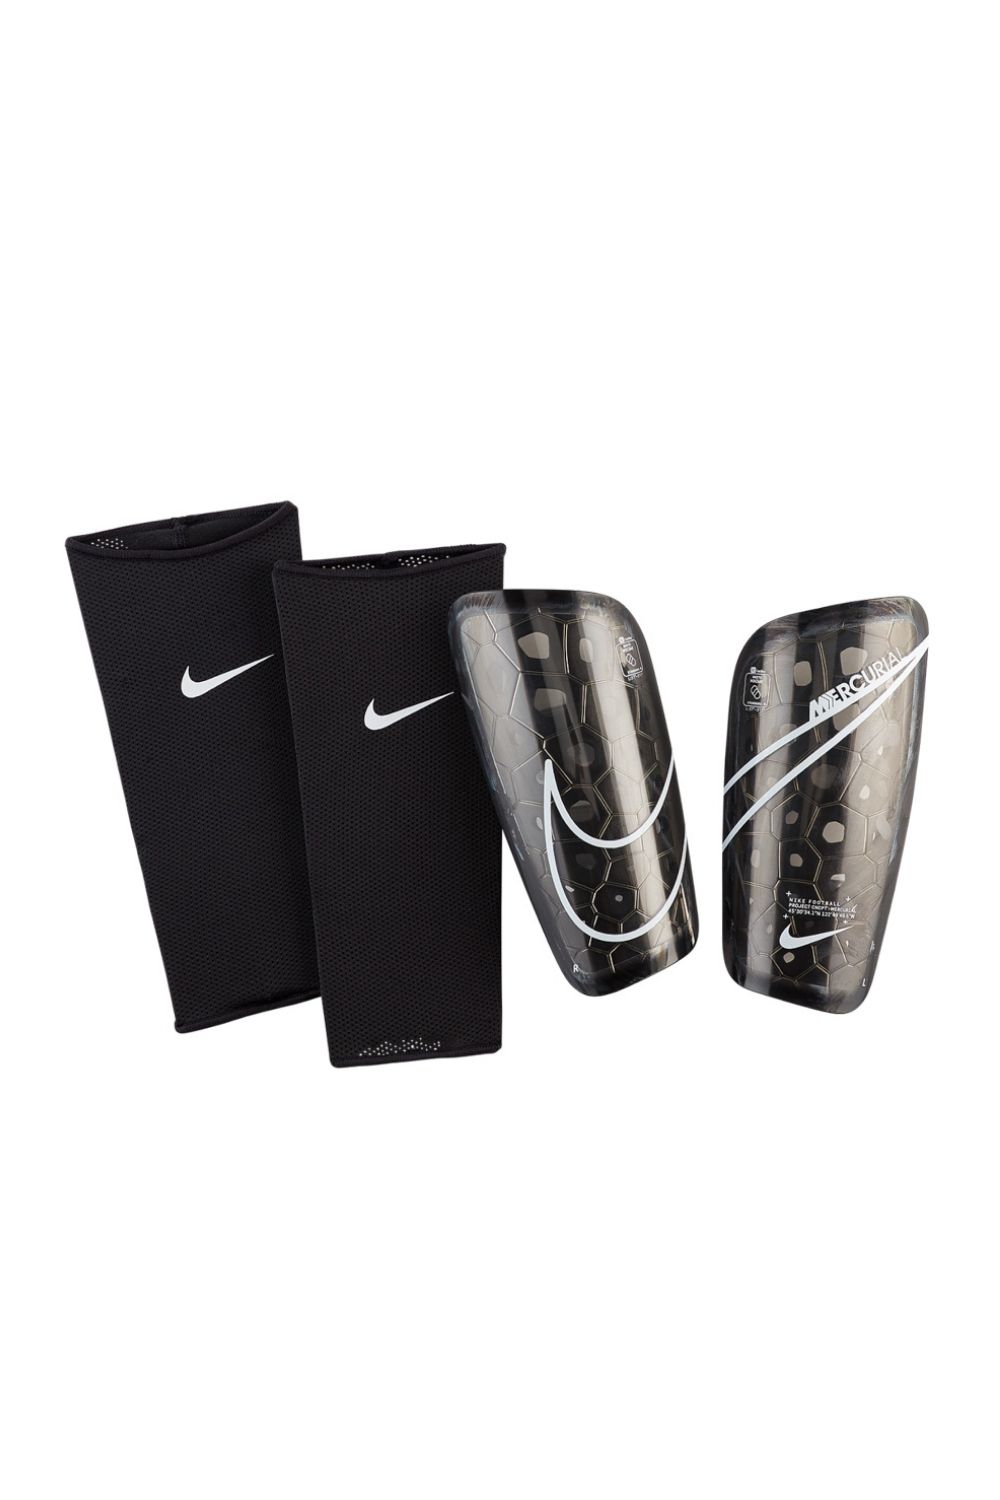 NIKE – Επικαλαμιδες ποδοσφαιρου Nike Mercurial Lite μαυρες